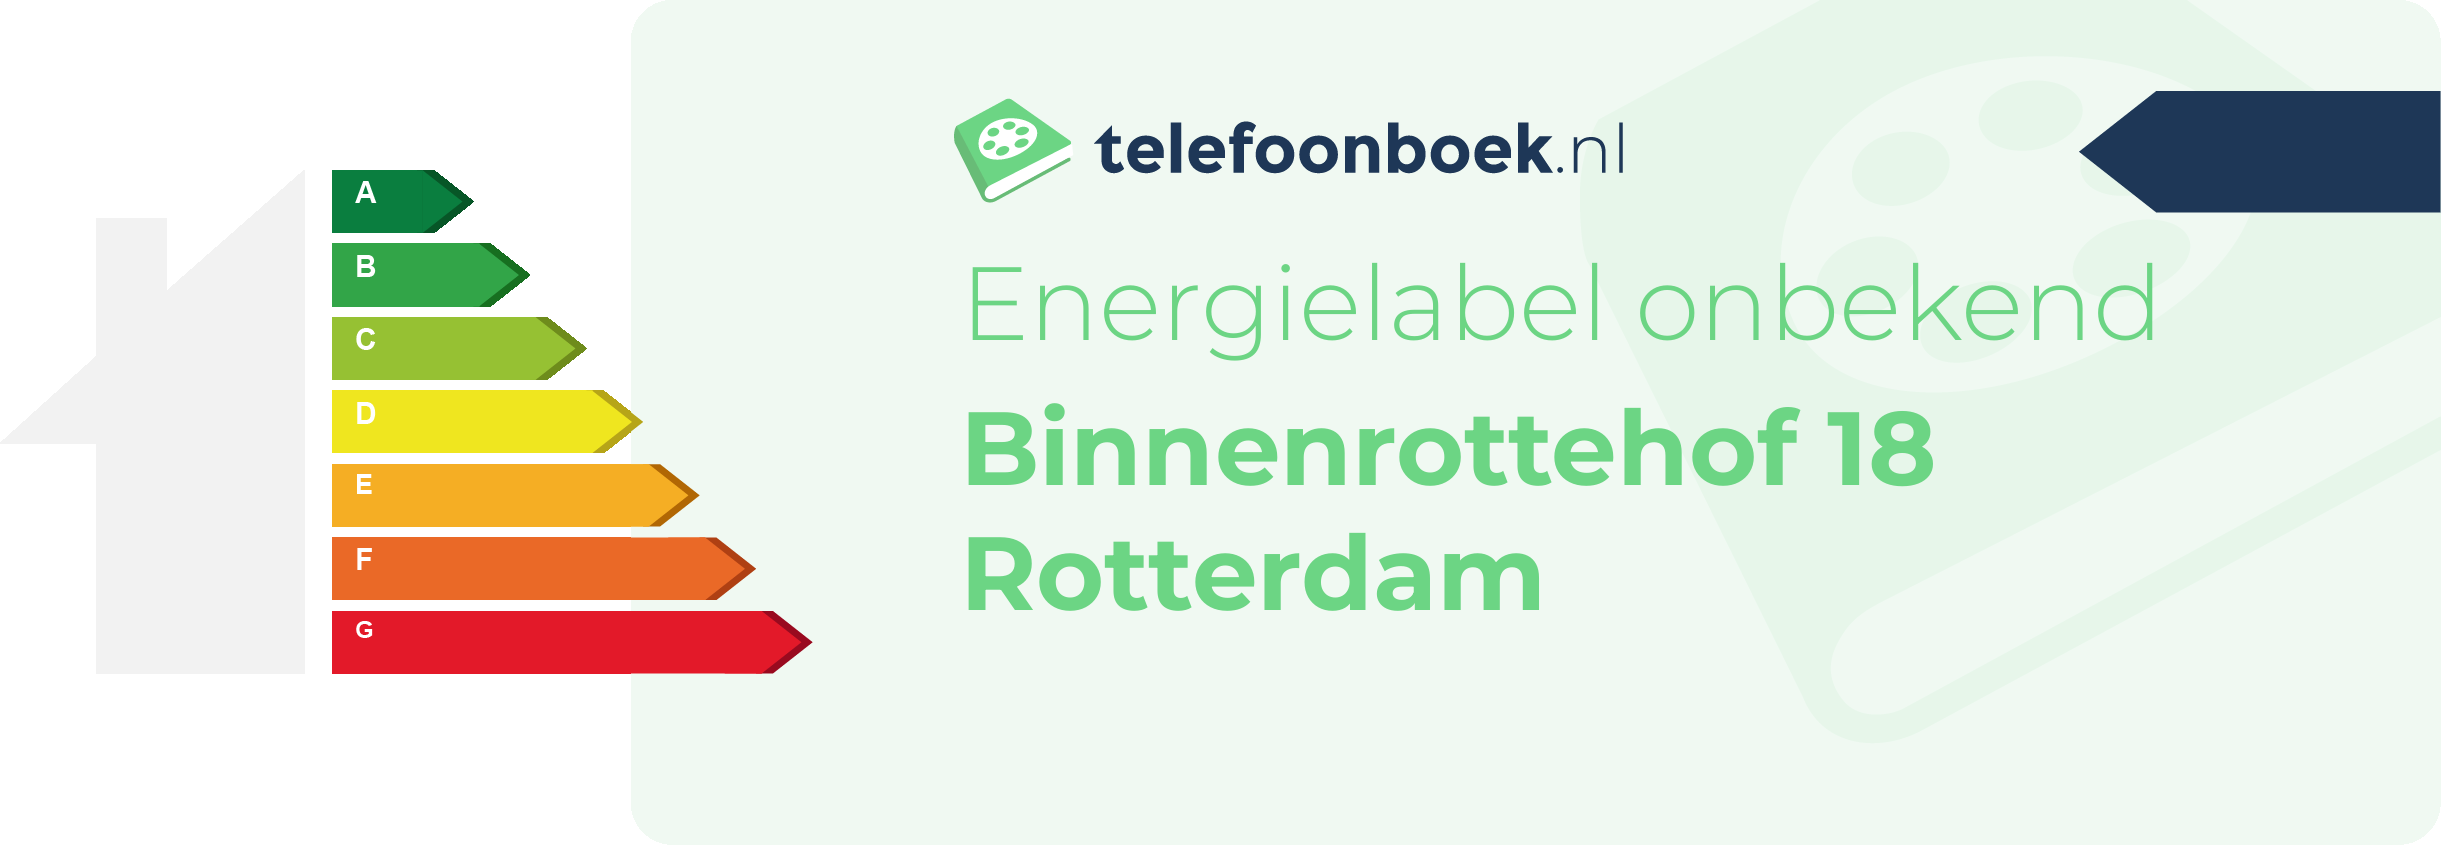 Energielabel Binnenrottehof 18 Rotterdam